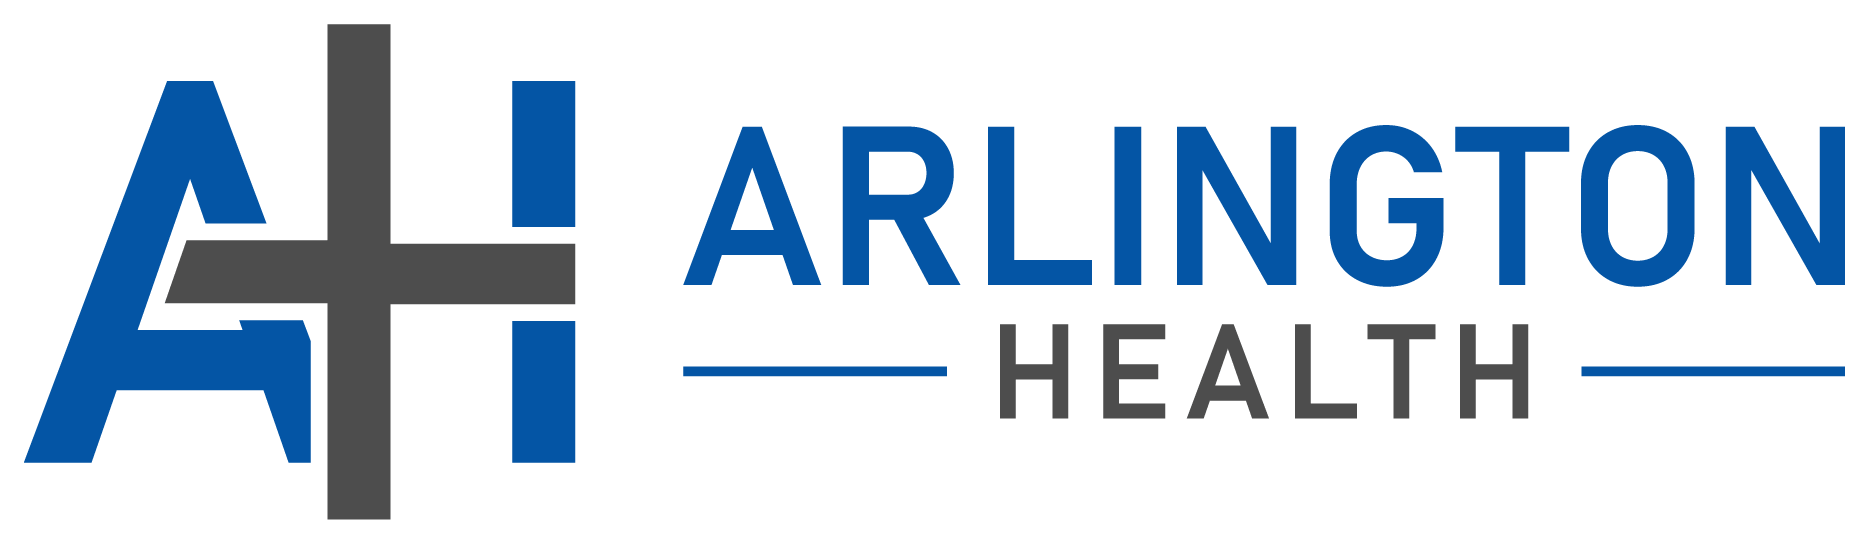 Arlington Health logo.